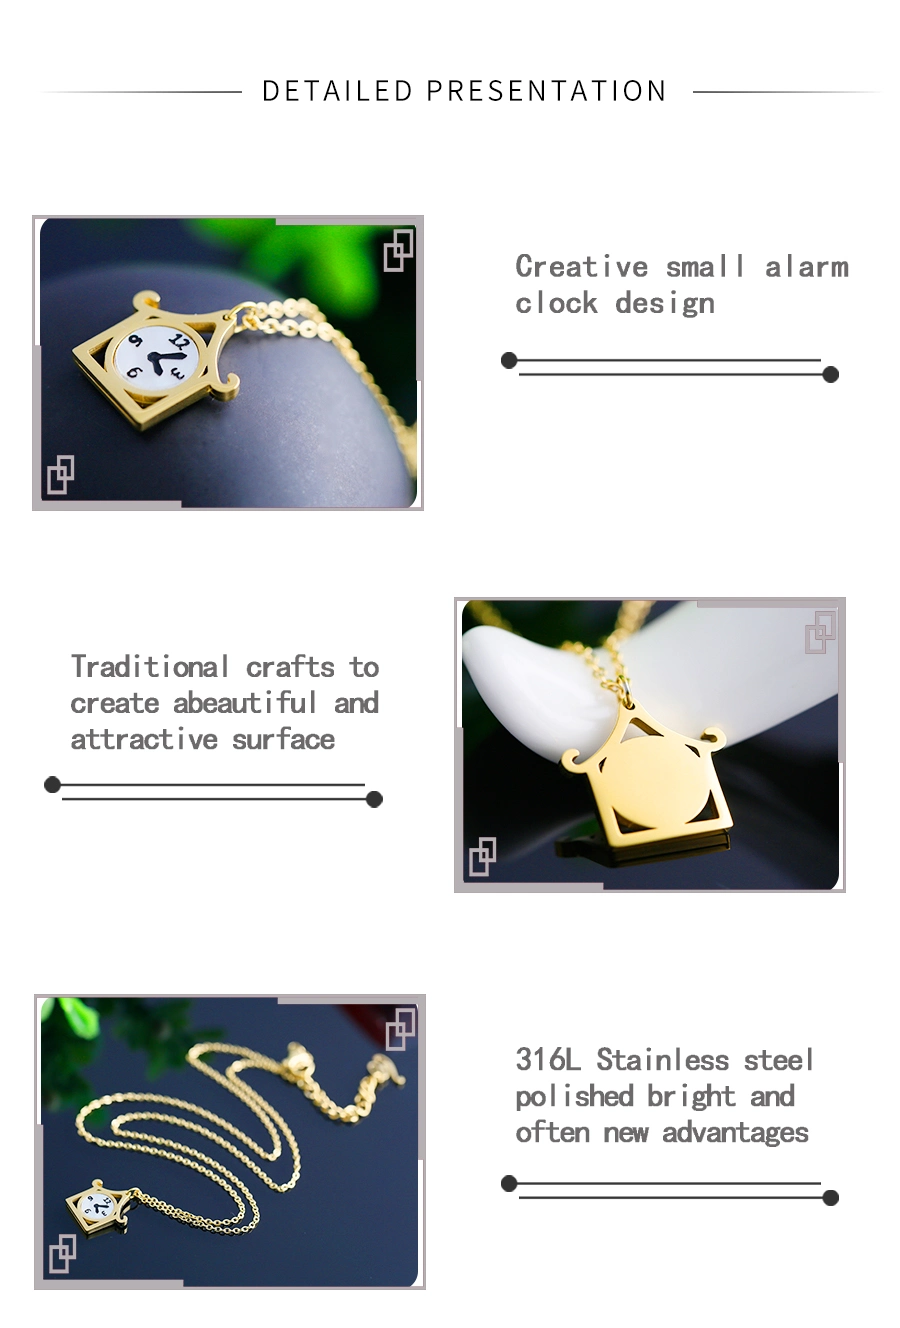 Collar Bone Necklace Women, Custom-Made Stainless Steel Jewelry Manufacturers, Creative Small Alarm Clock Pendant